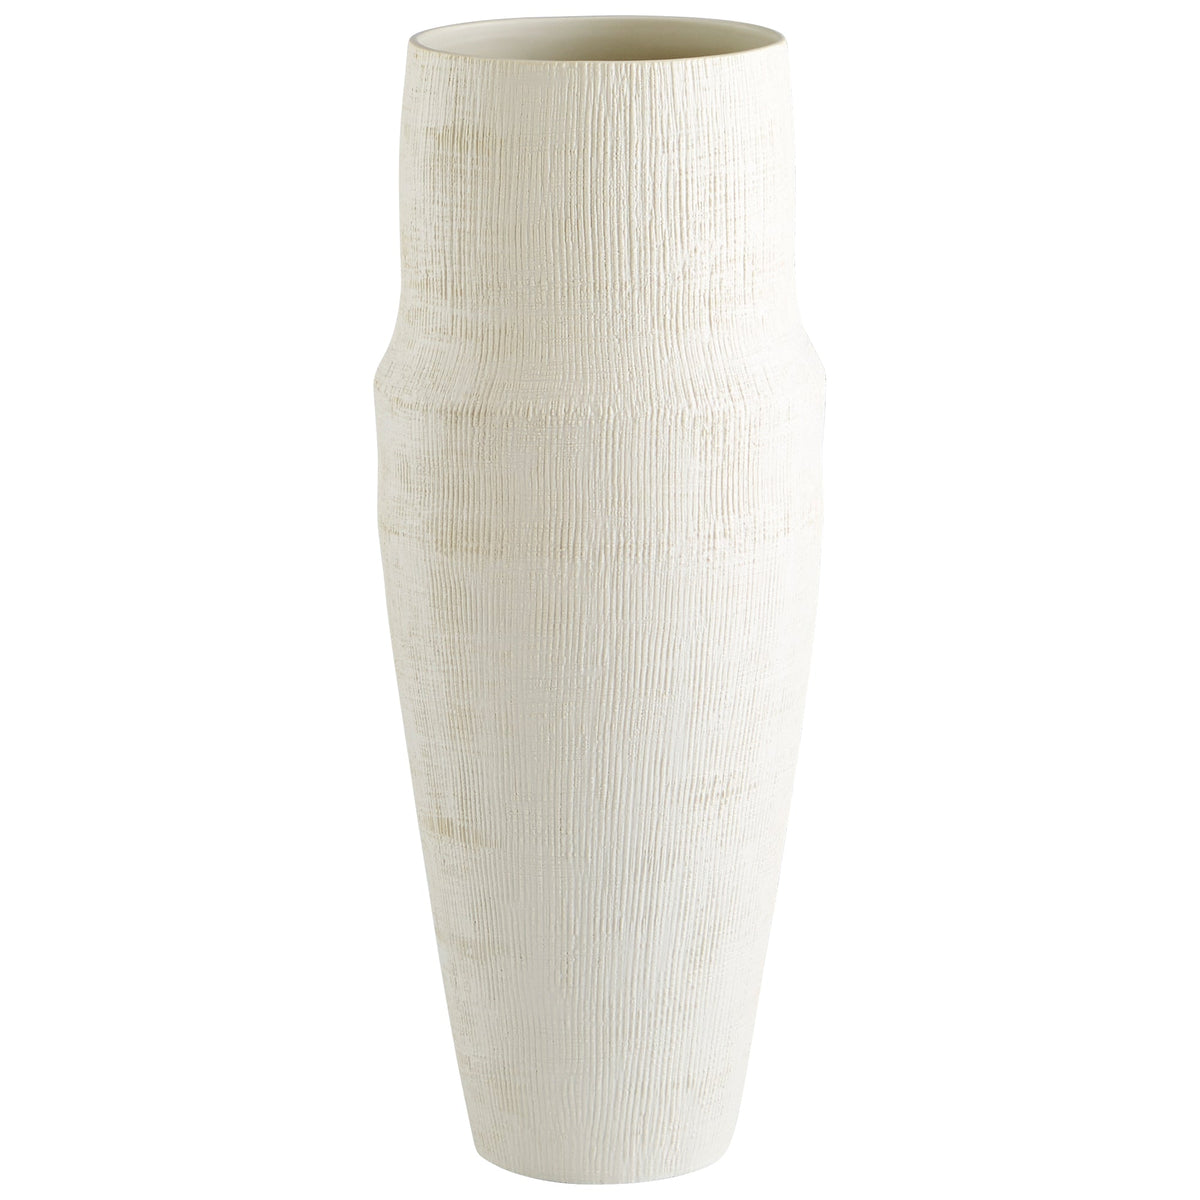 Leela Vase | White -Large by Cyan